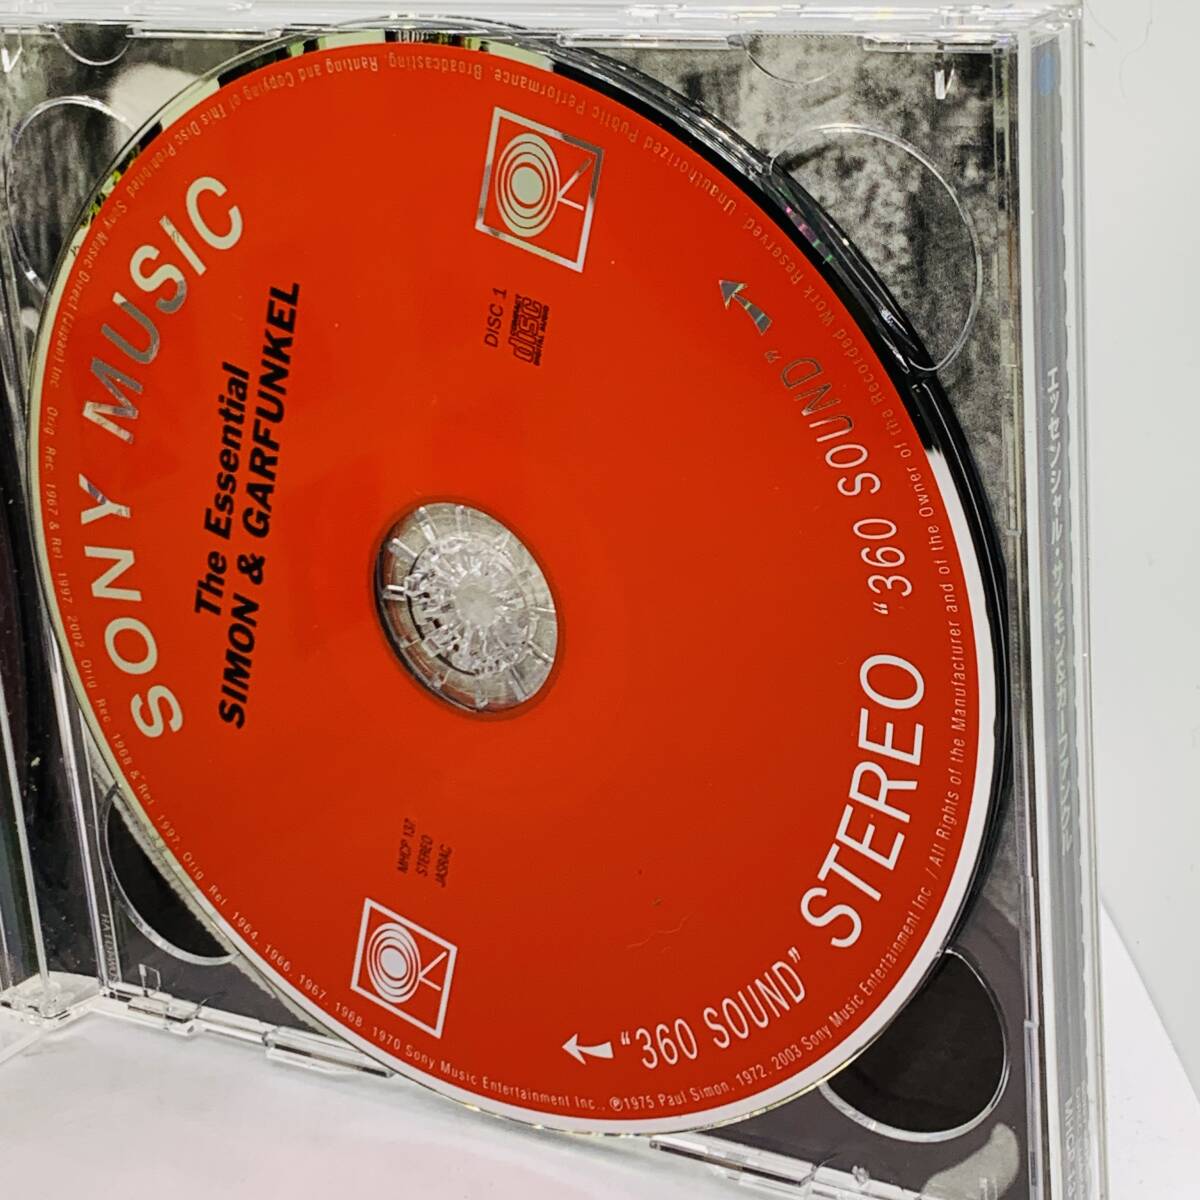 【CD】サイモン&ガーファンクル「The Essential Simon & Garfunkel」2CDベスト 20240313G05